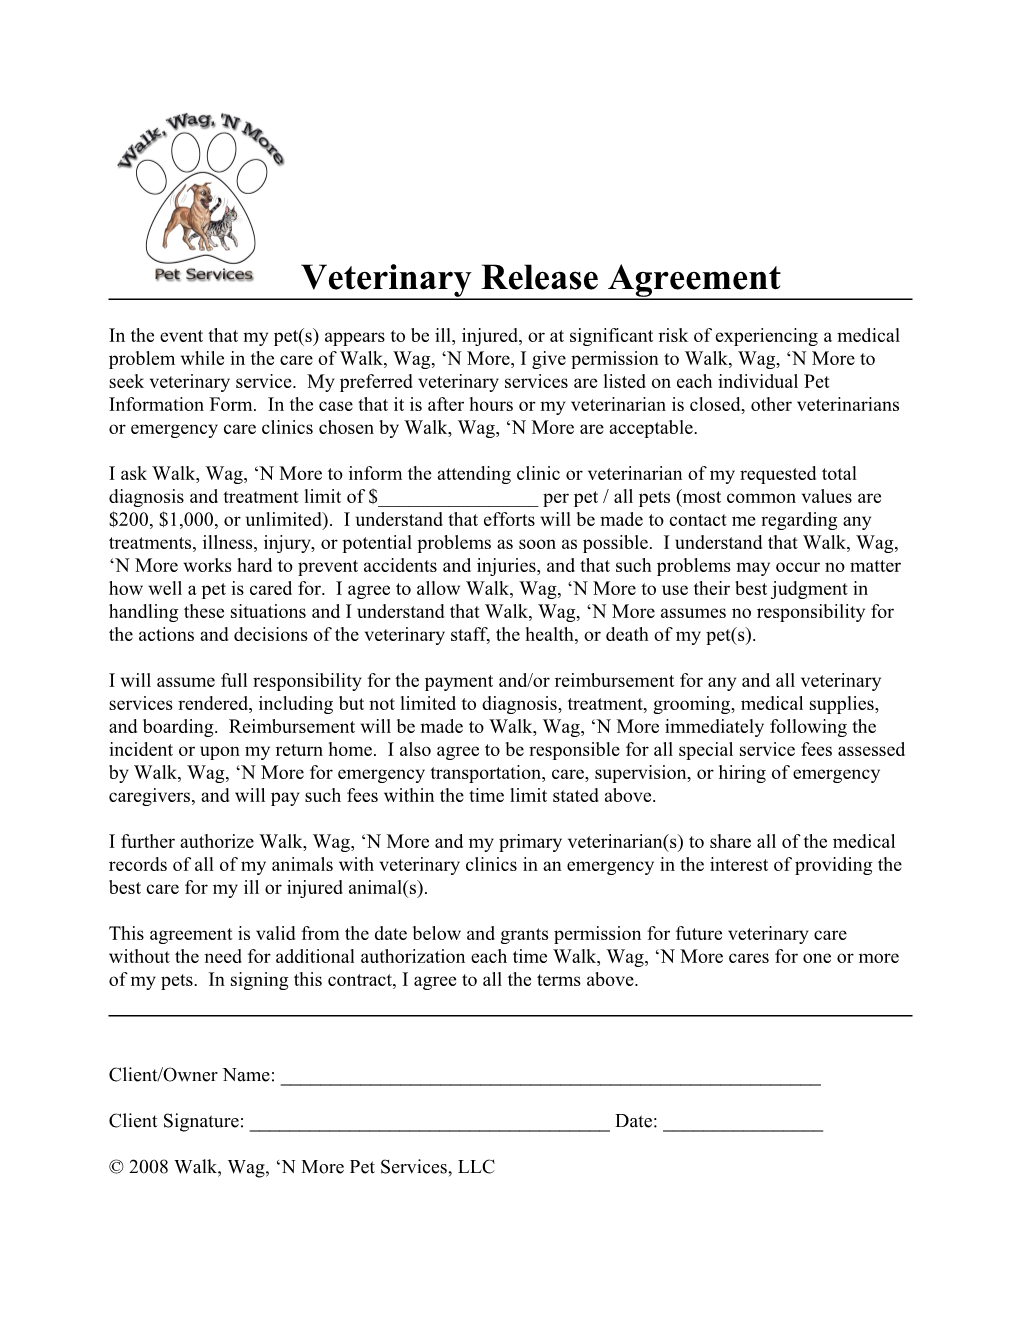 Walk Wag N More Veterinary Release Agreement